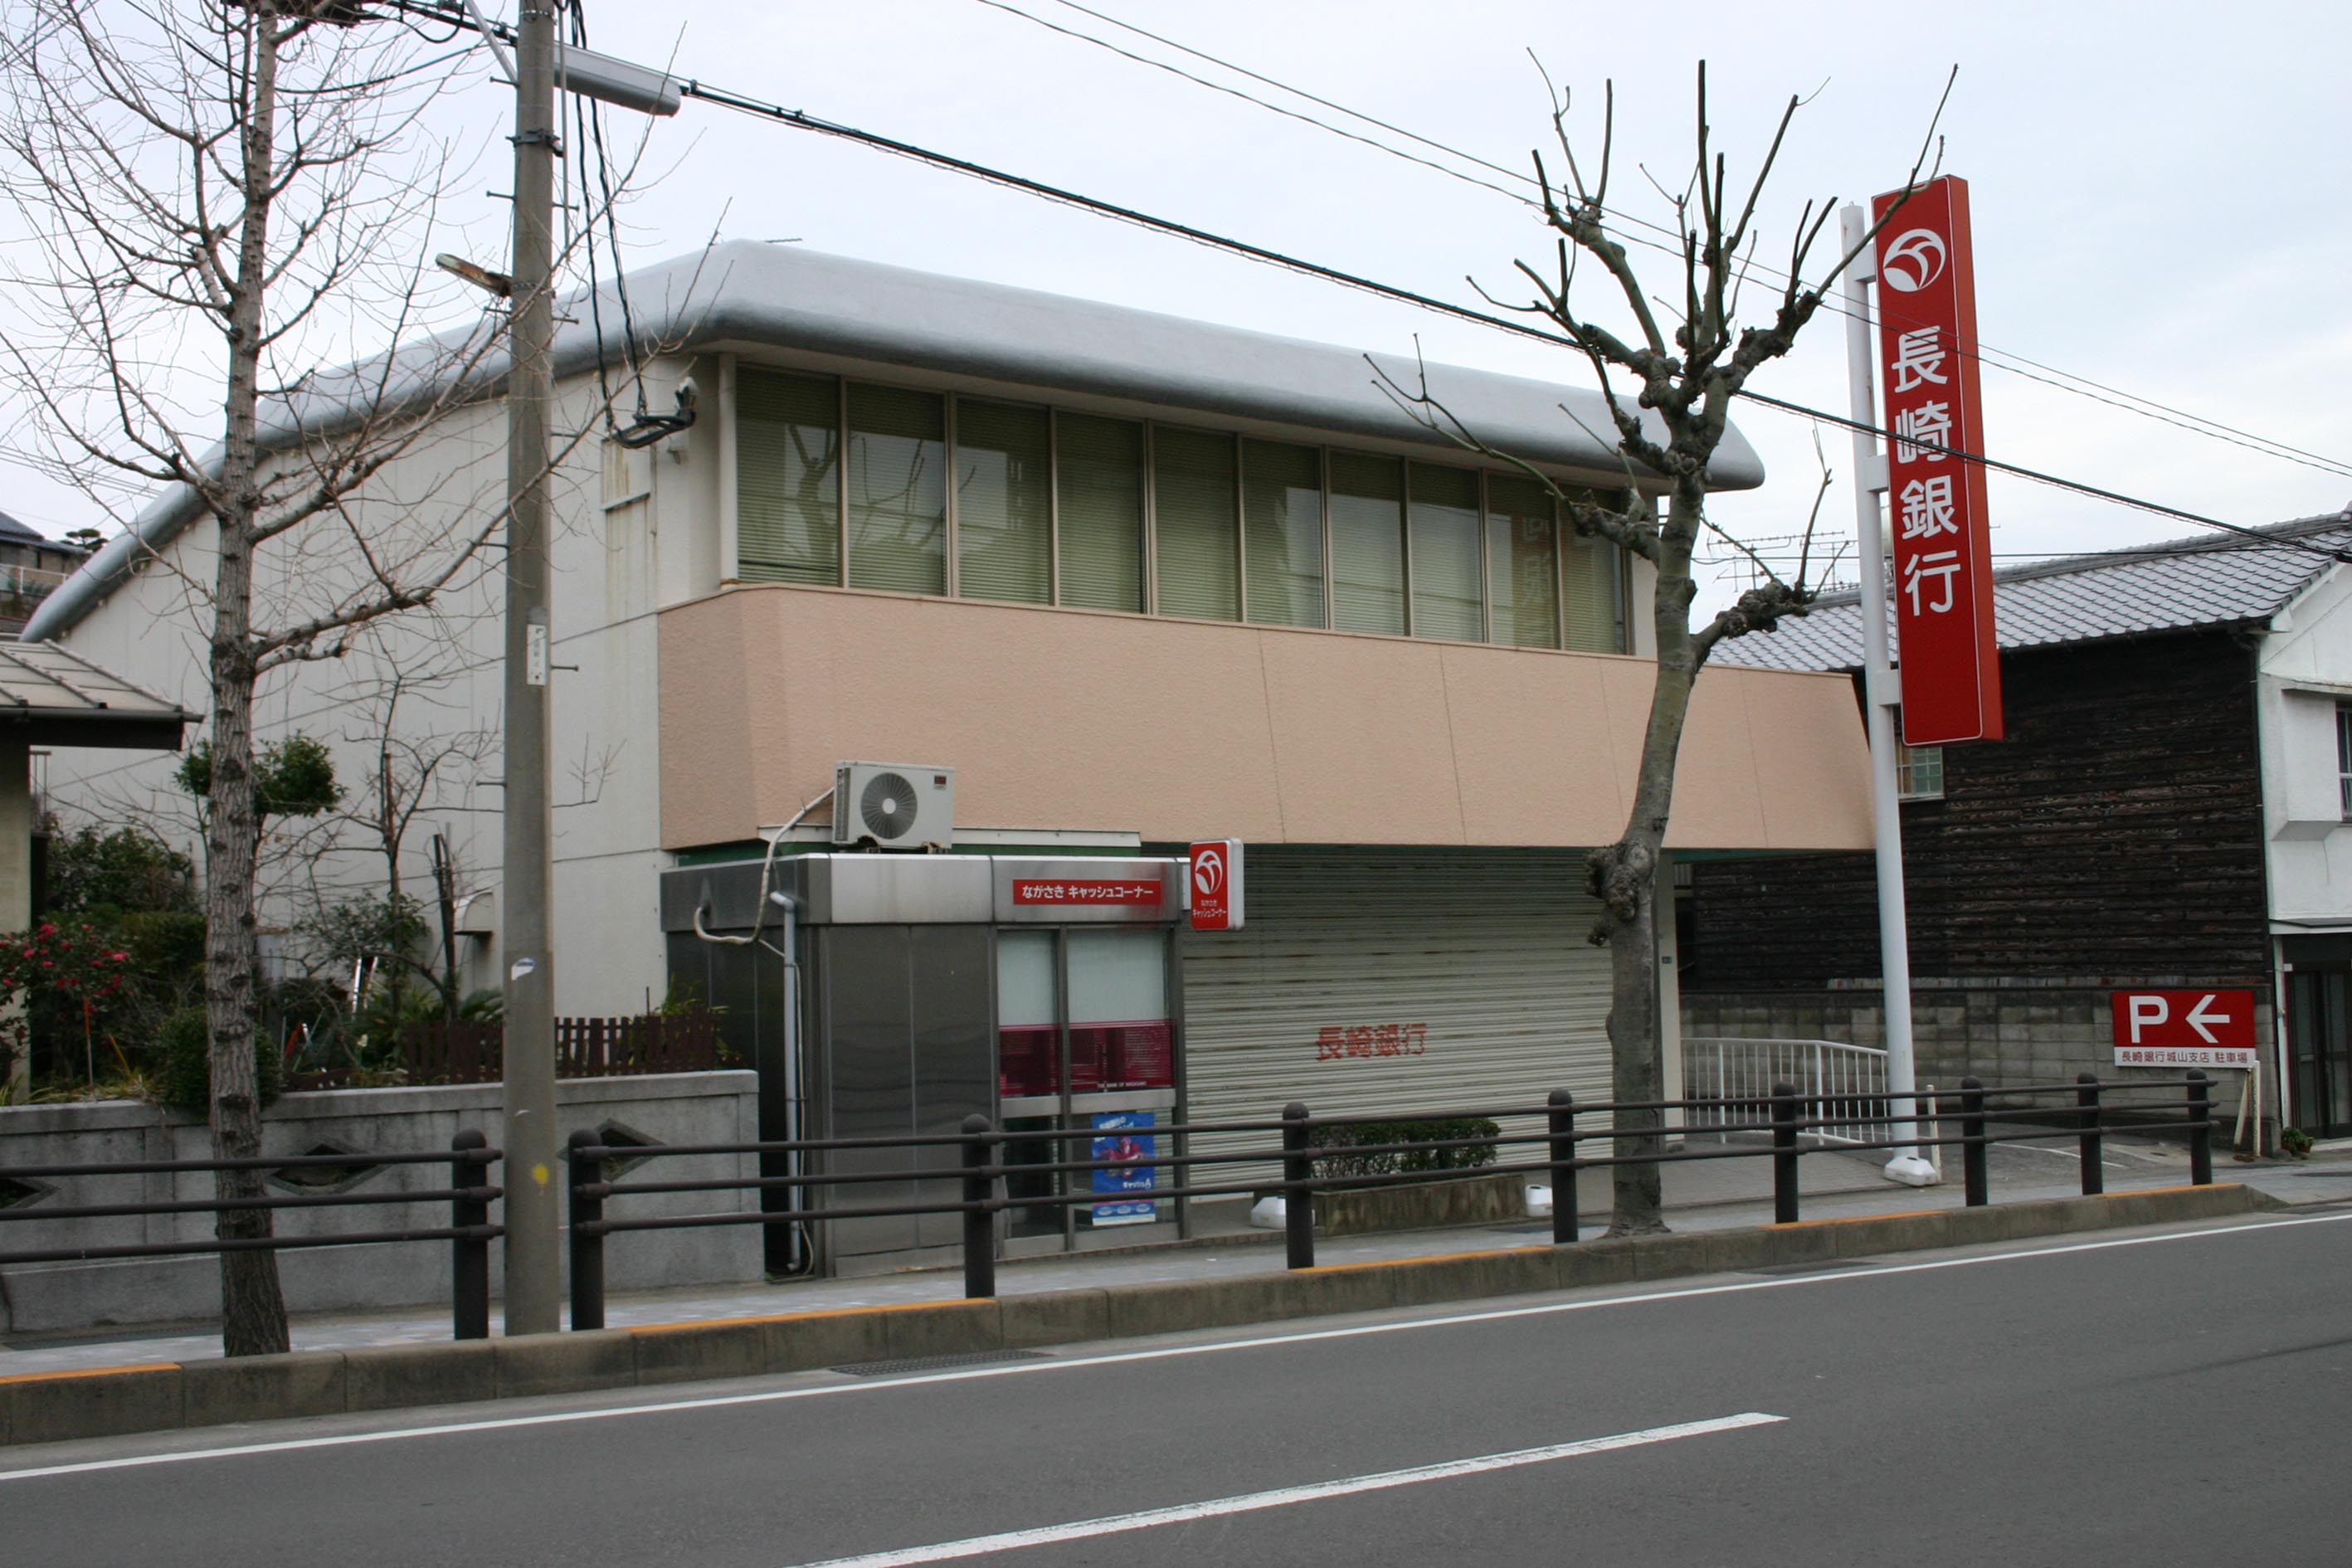 Bank. Nagasakiginko Shiroyama 342m to the branch (Bank)